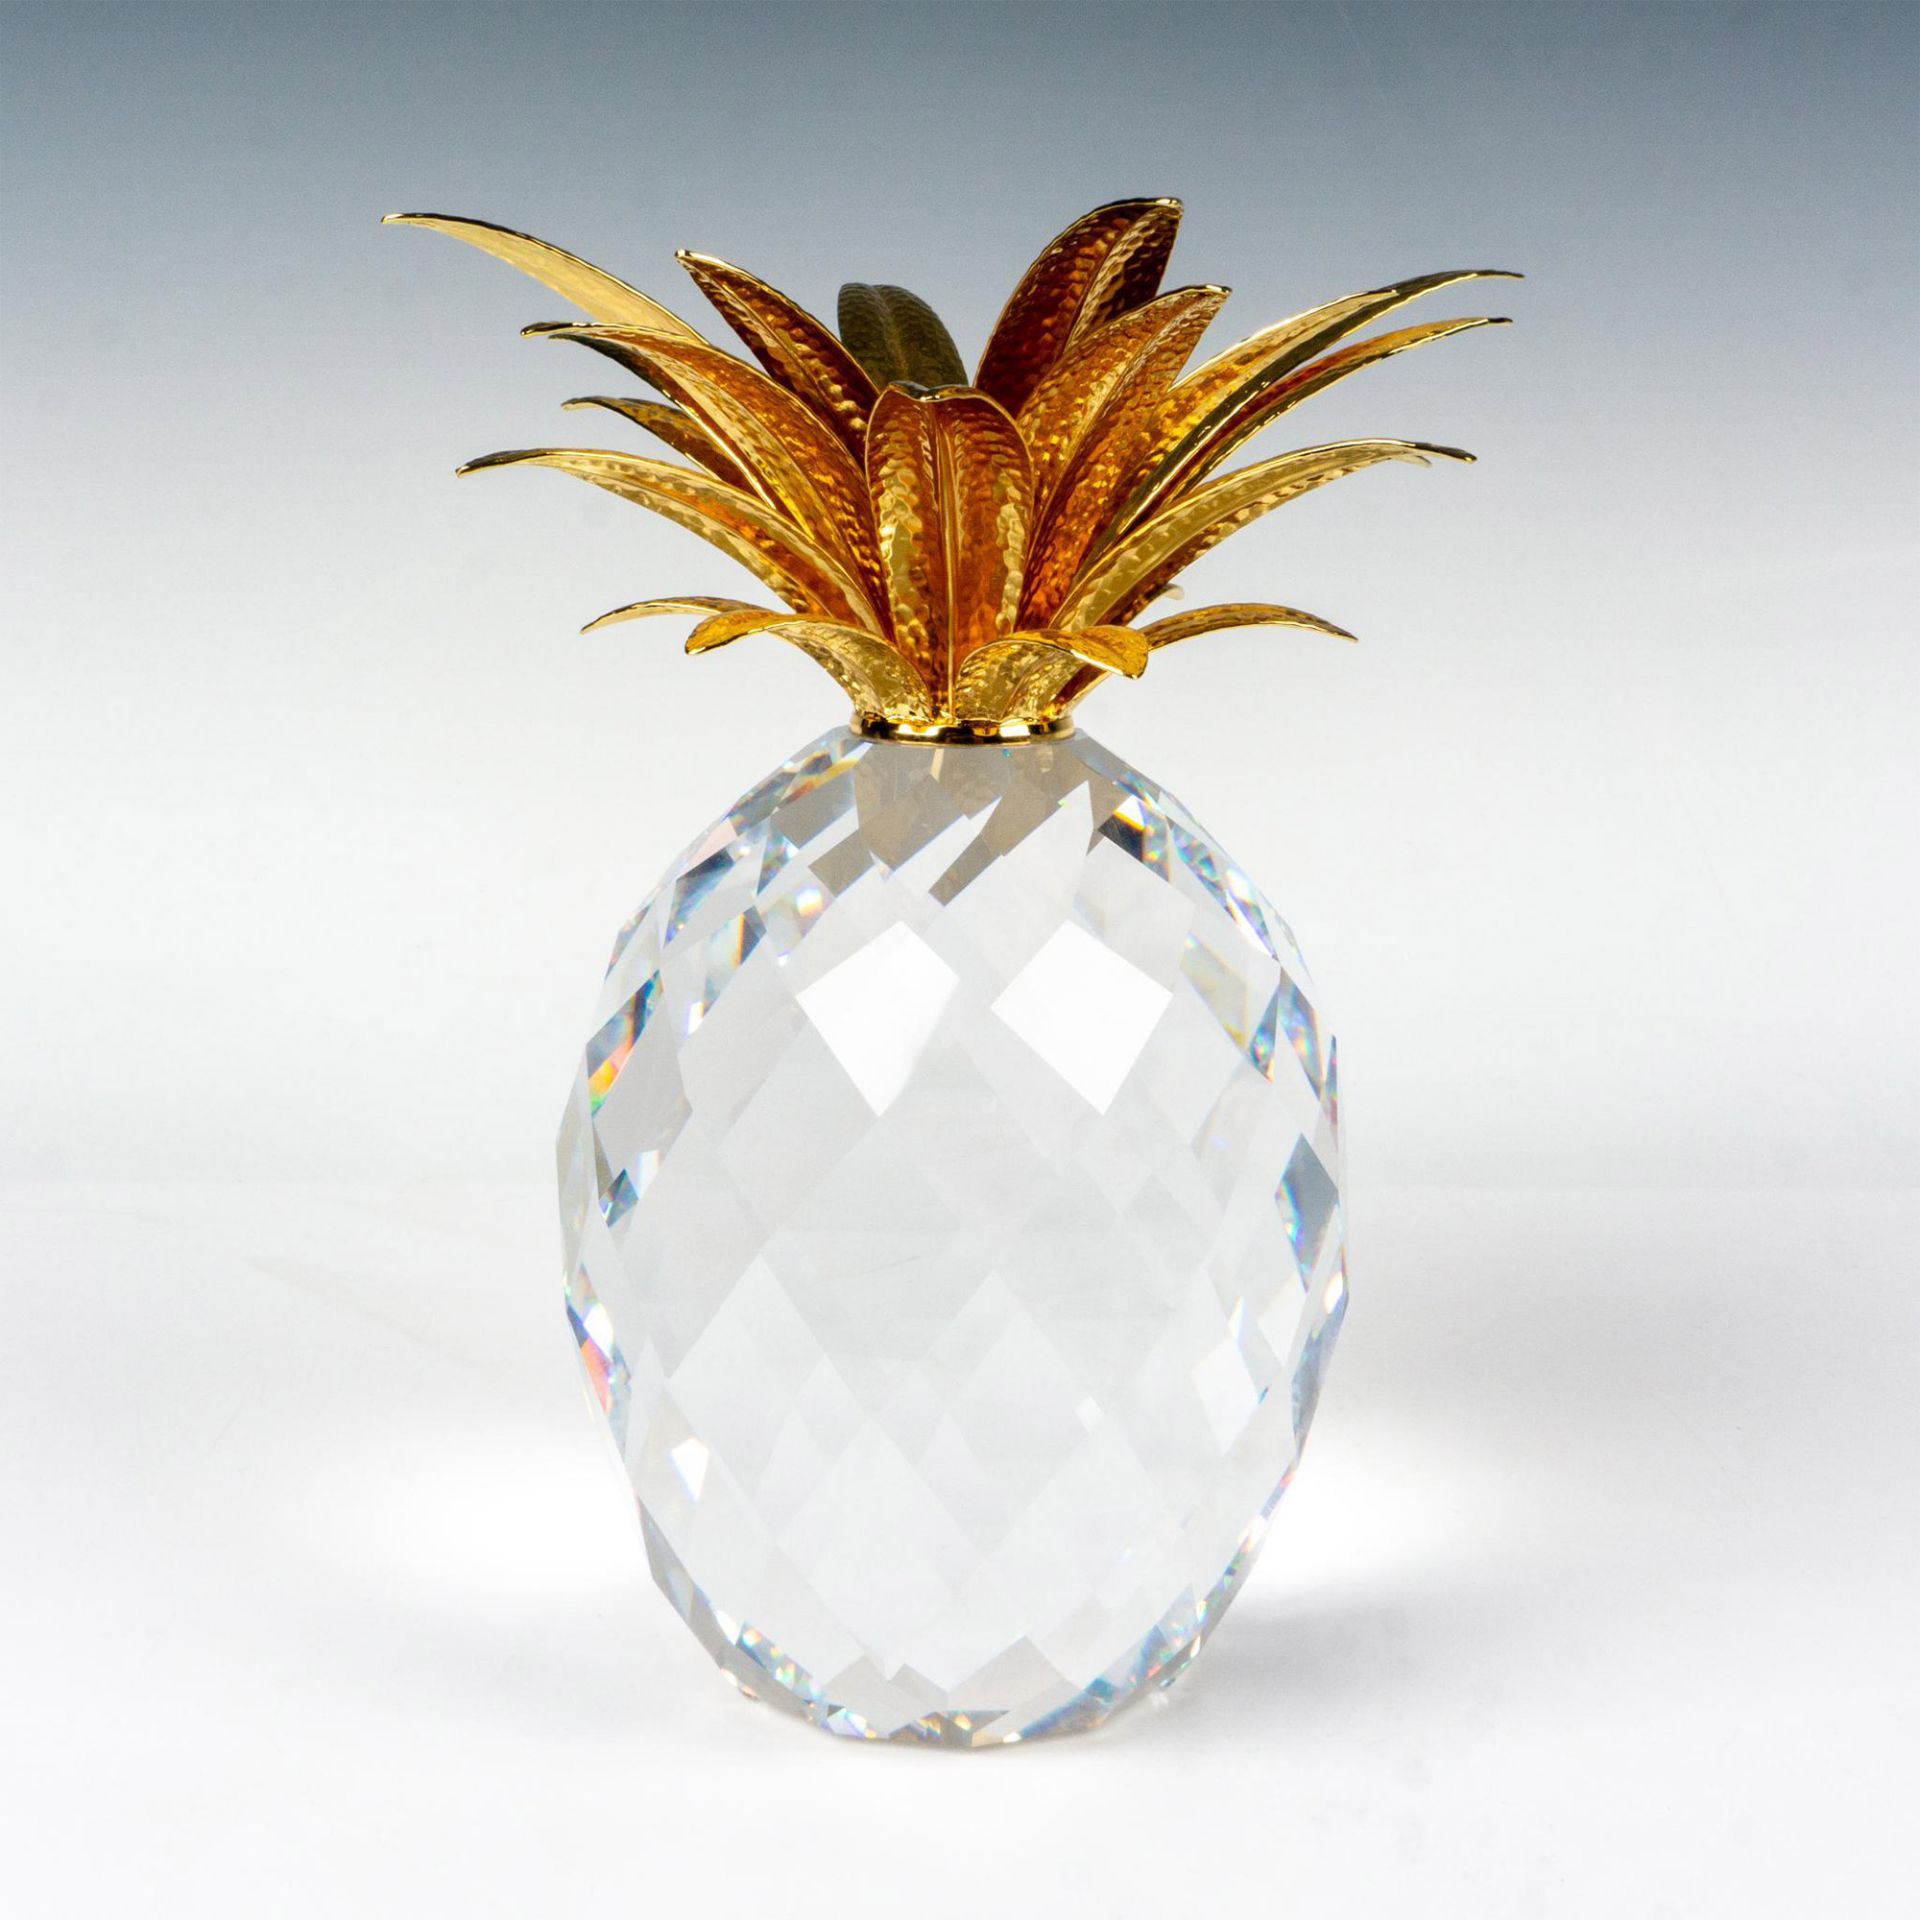 Swarovski Crystal Figurine, Giant Pineapple